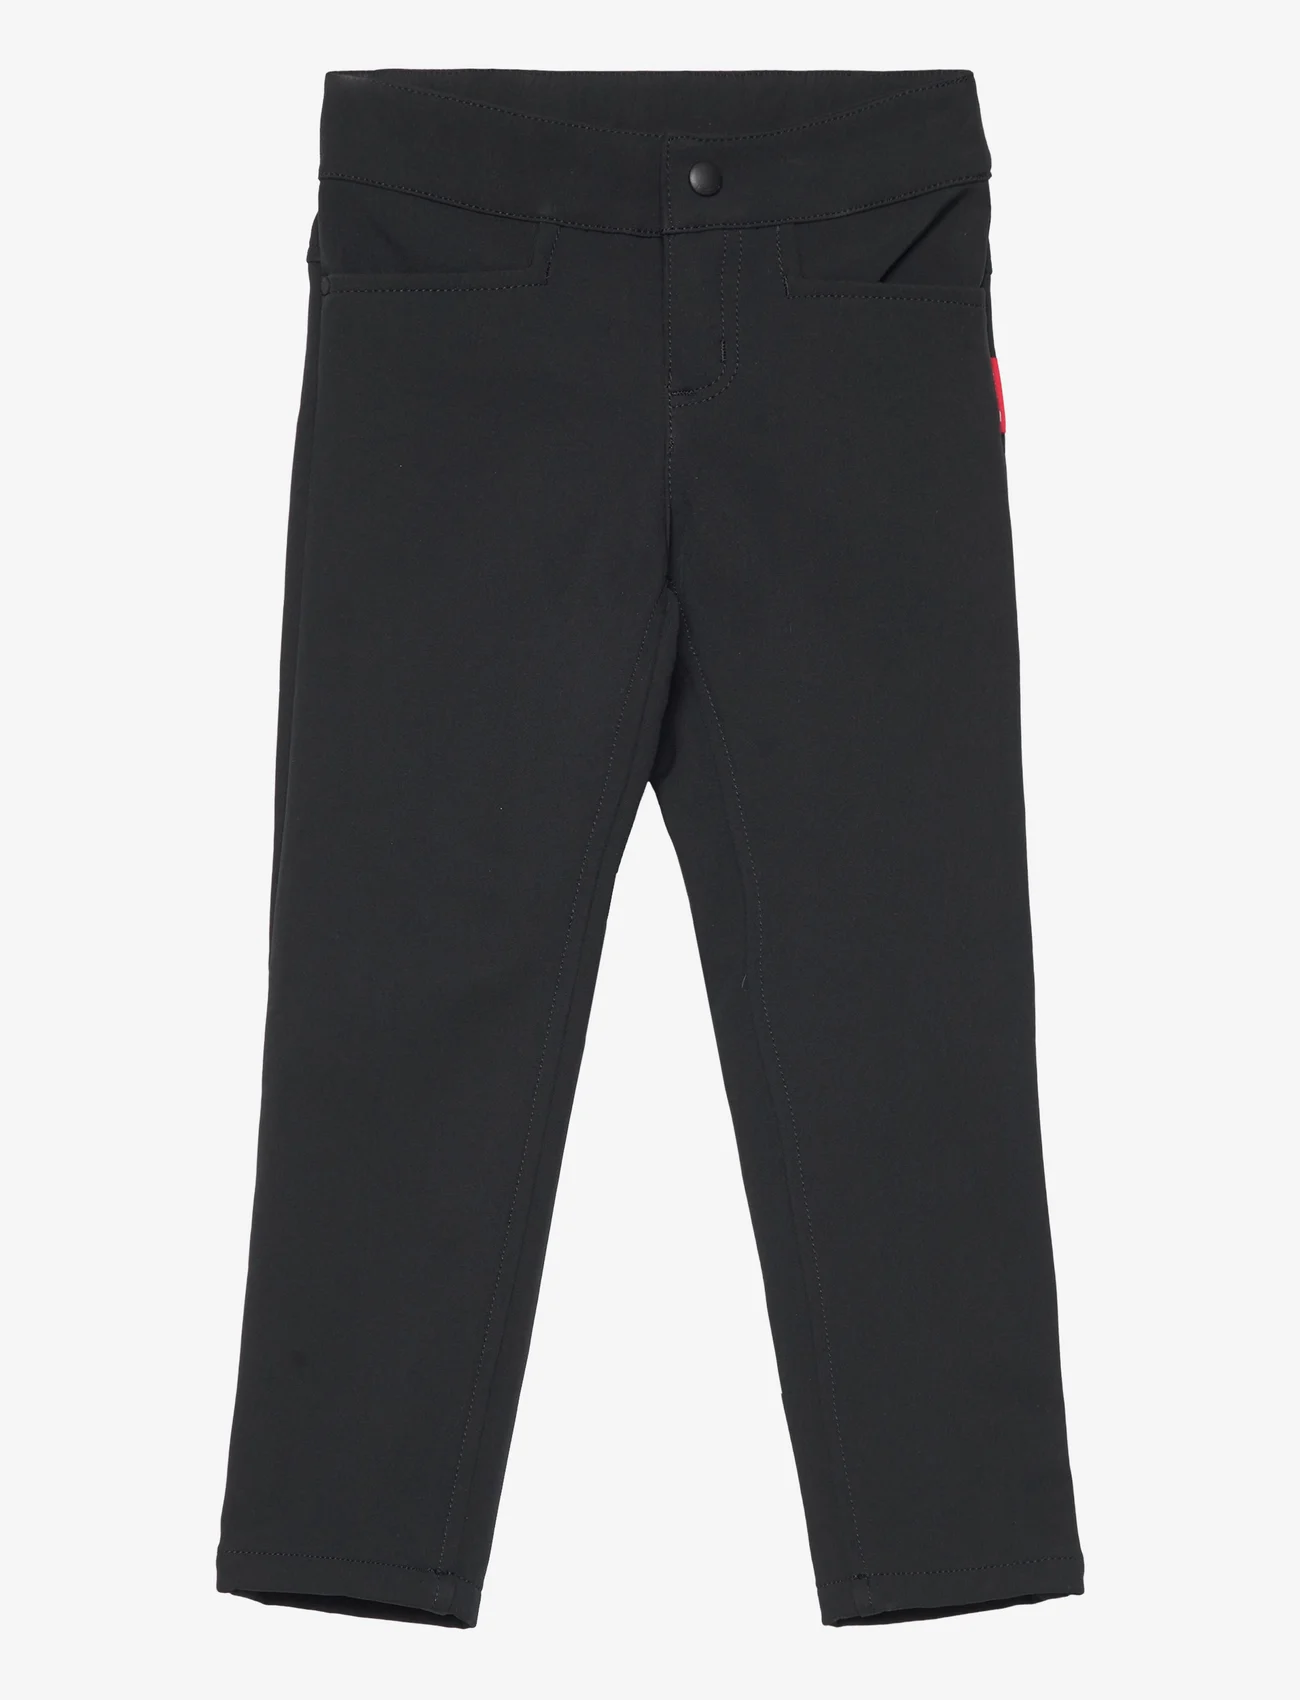 Reima - Softshell pants, Idea - dzieci - black - 0